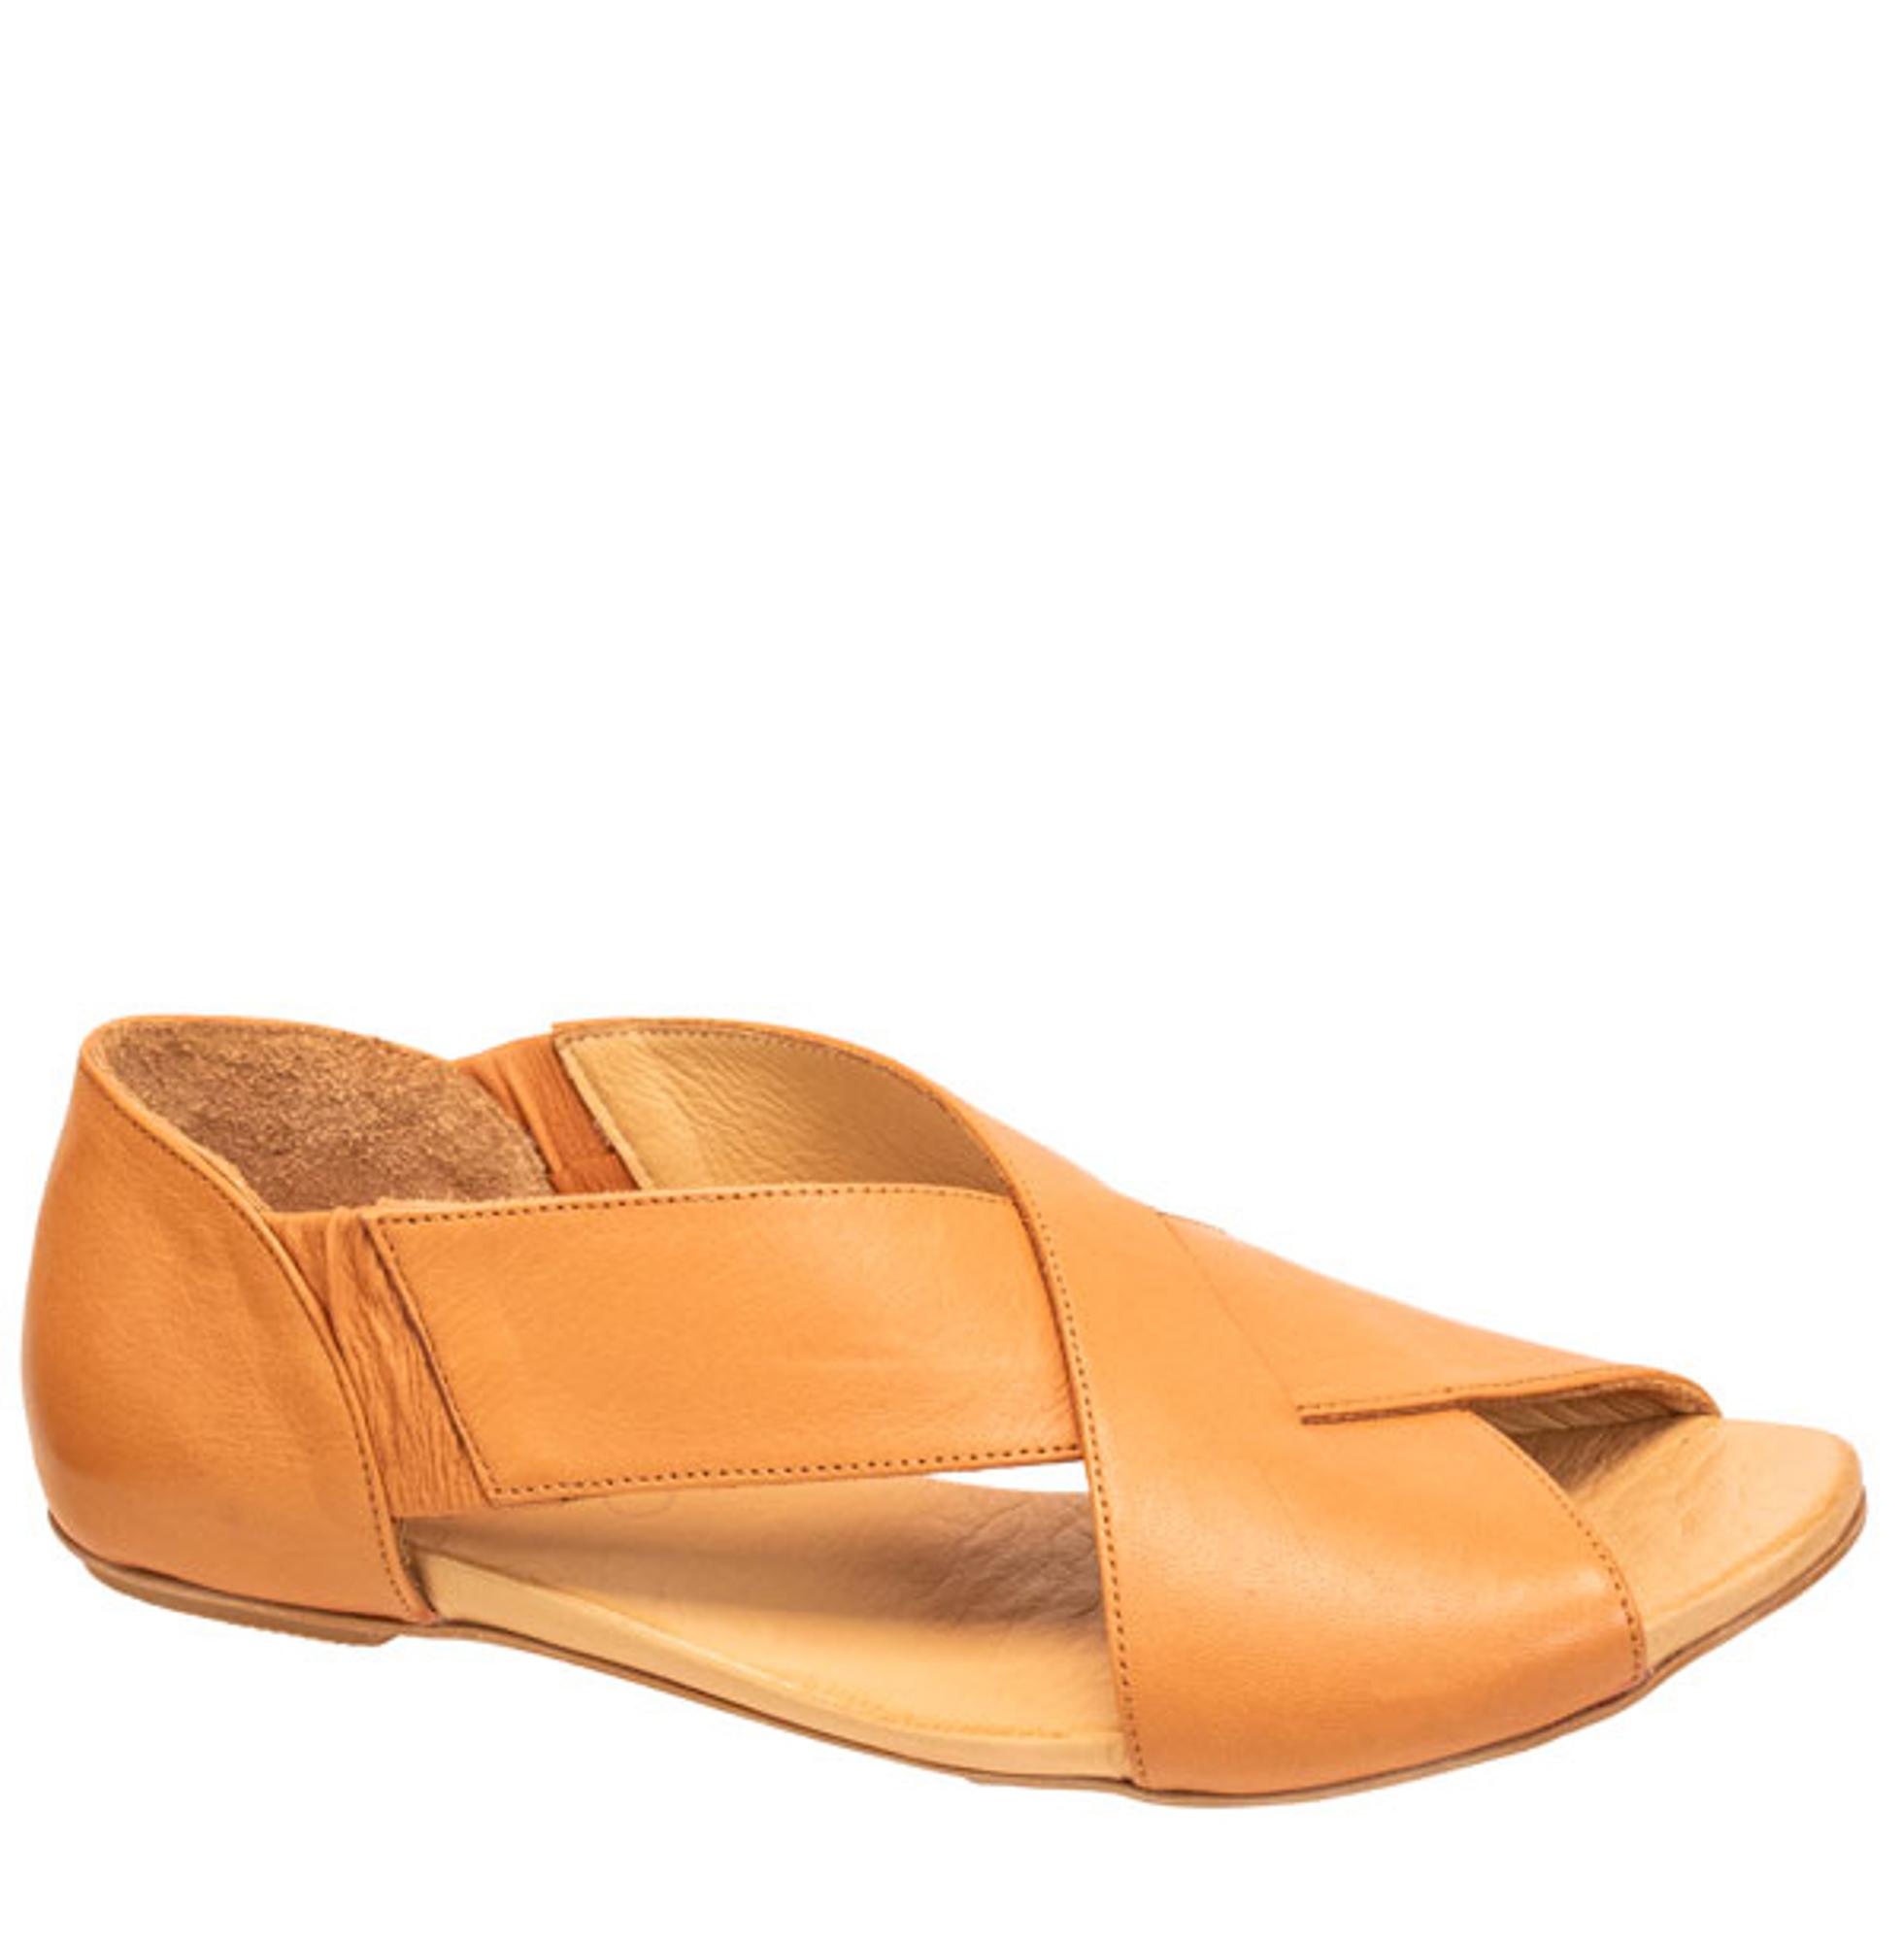 Womens KORIE sandal / Tan leather 